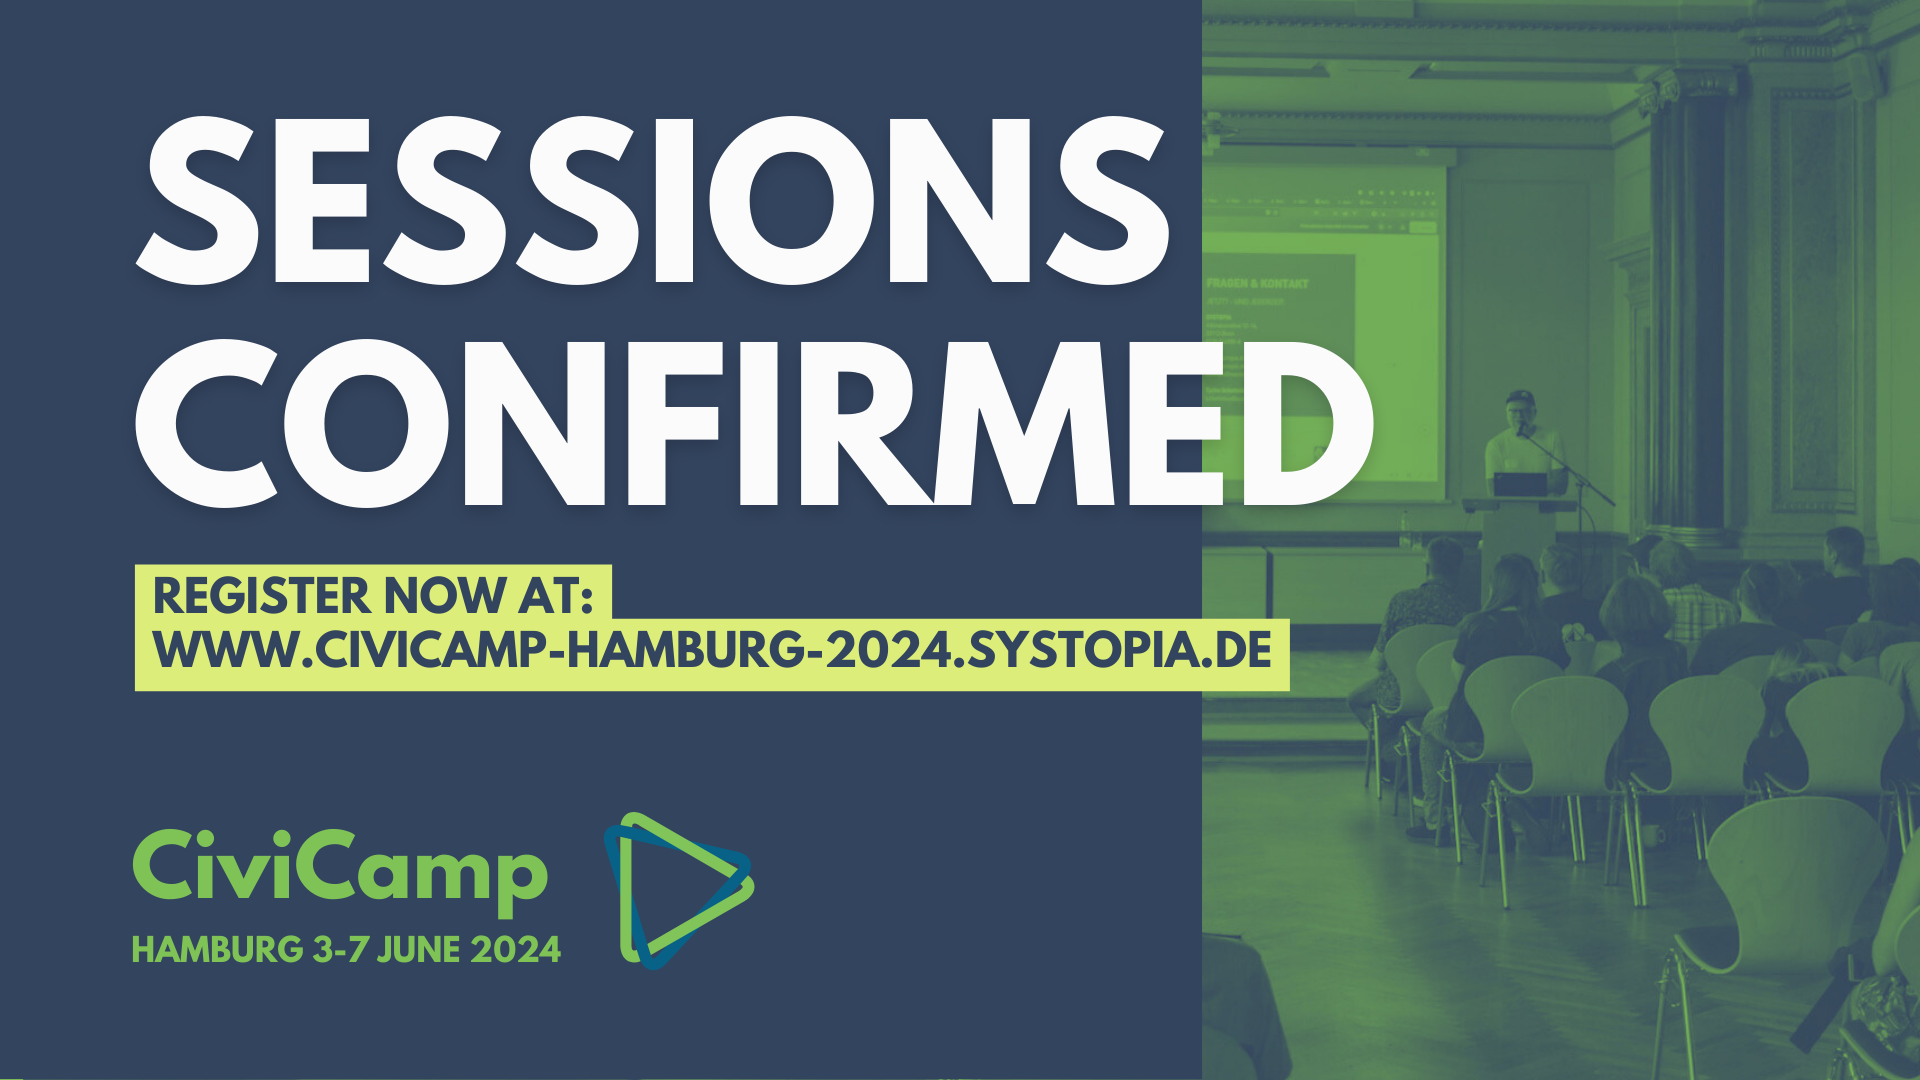 speaker at CiviCamp Leipzig,
text: Sessions confirmed, register now at: www.civicamp-hamburg-2024.systopia.de
CiviCamp Hamburg 3-7 June 2024